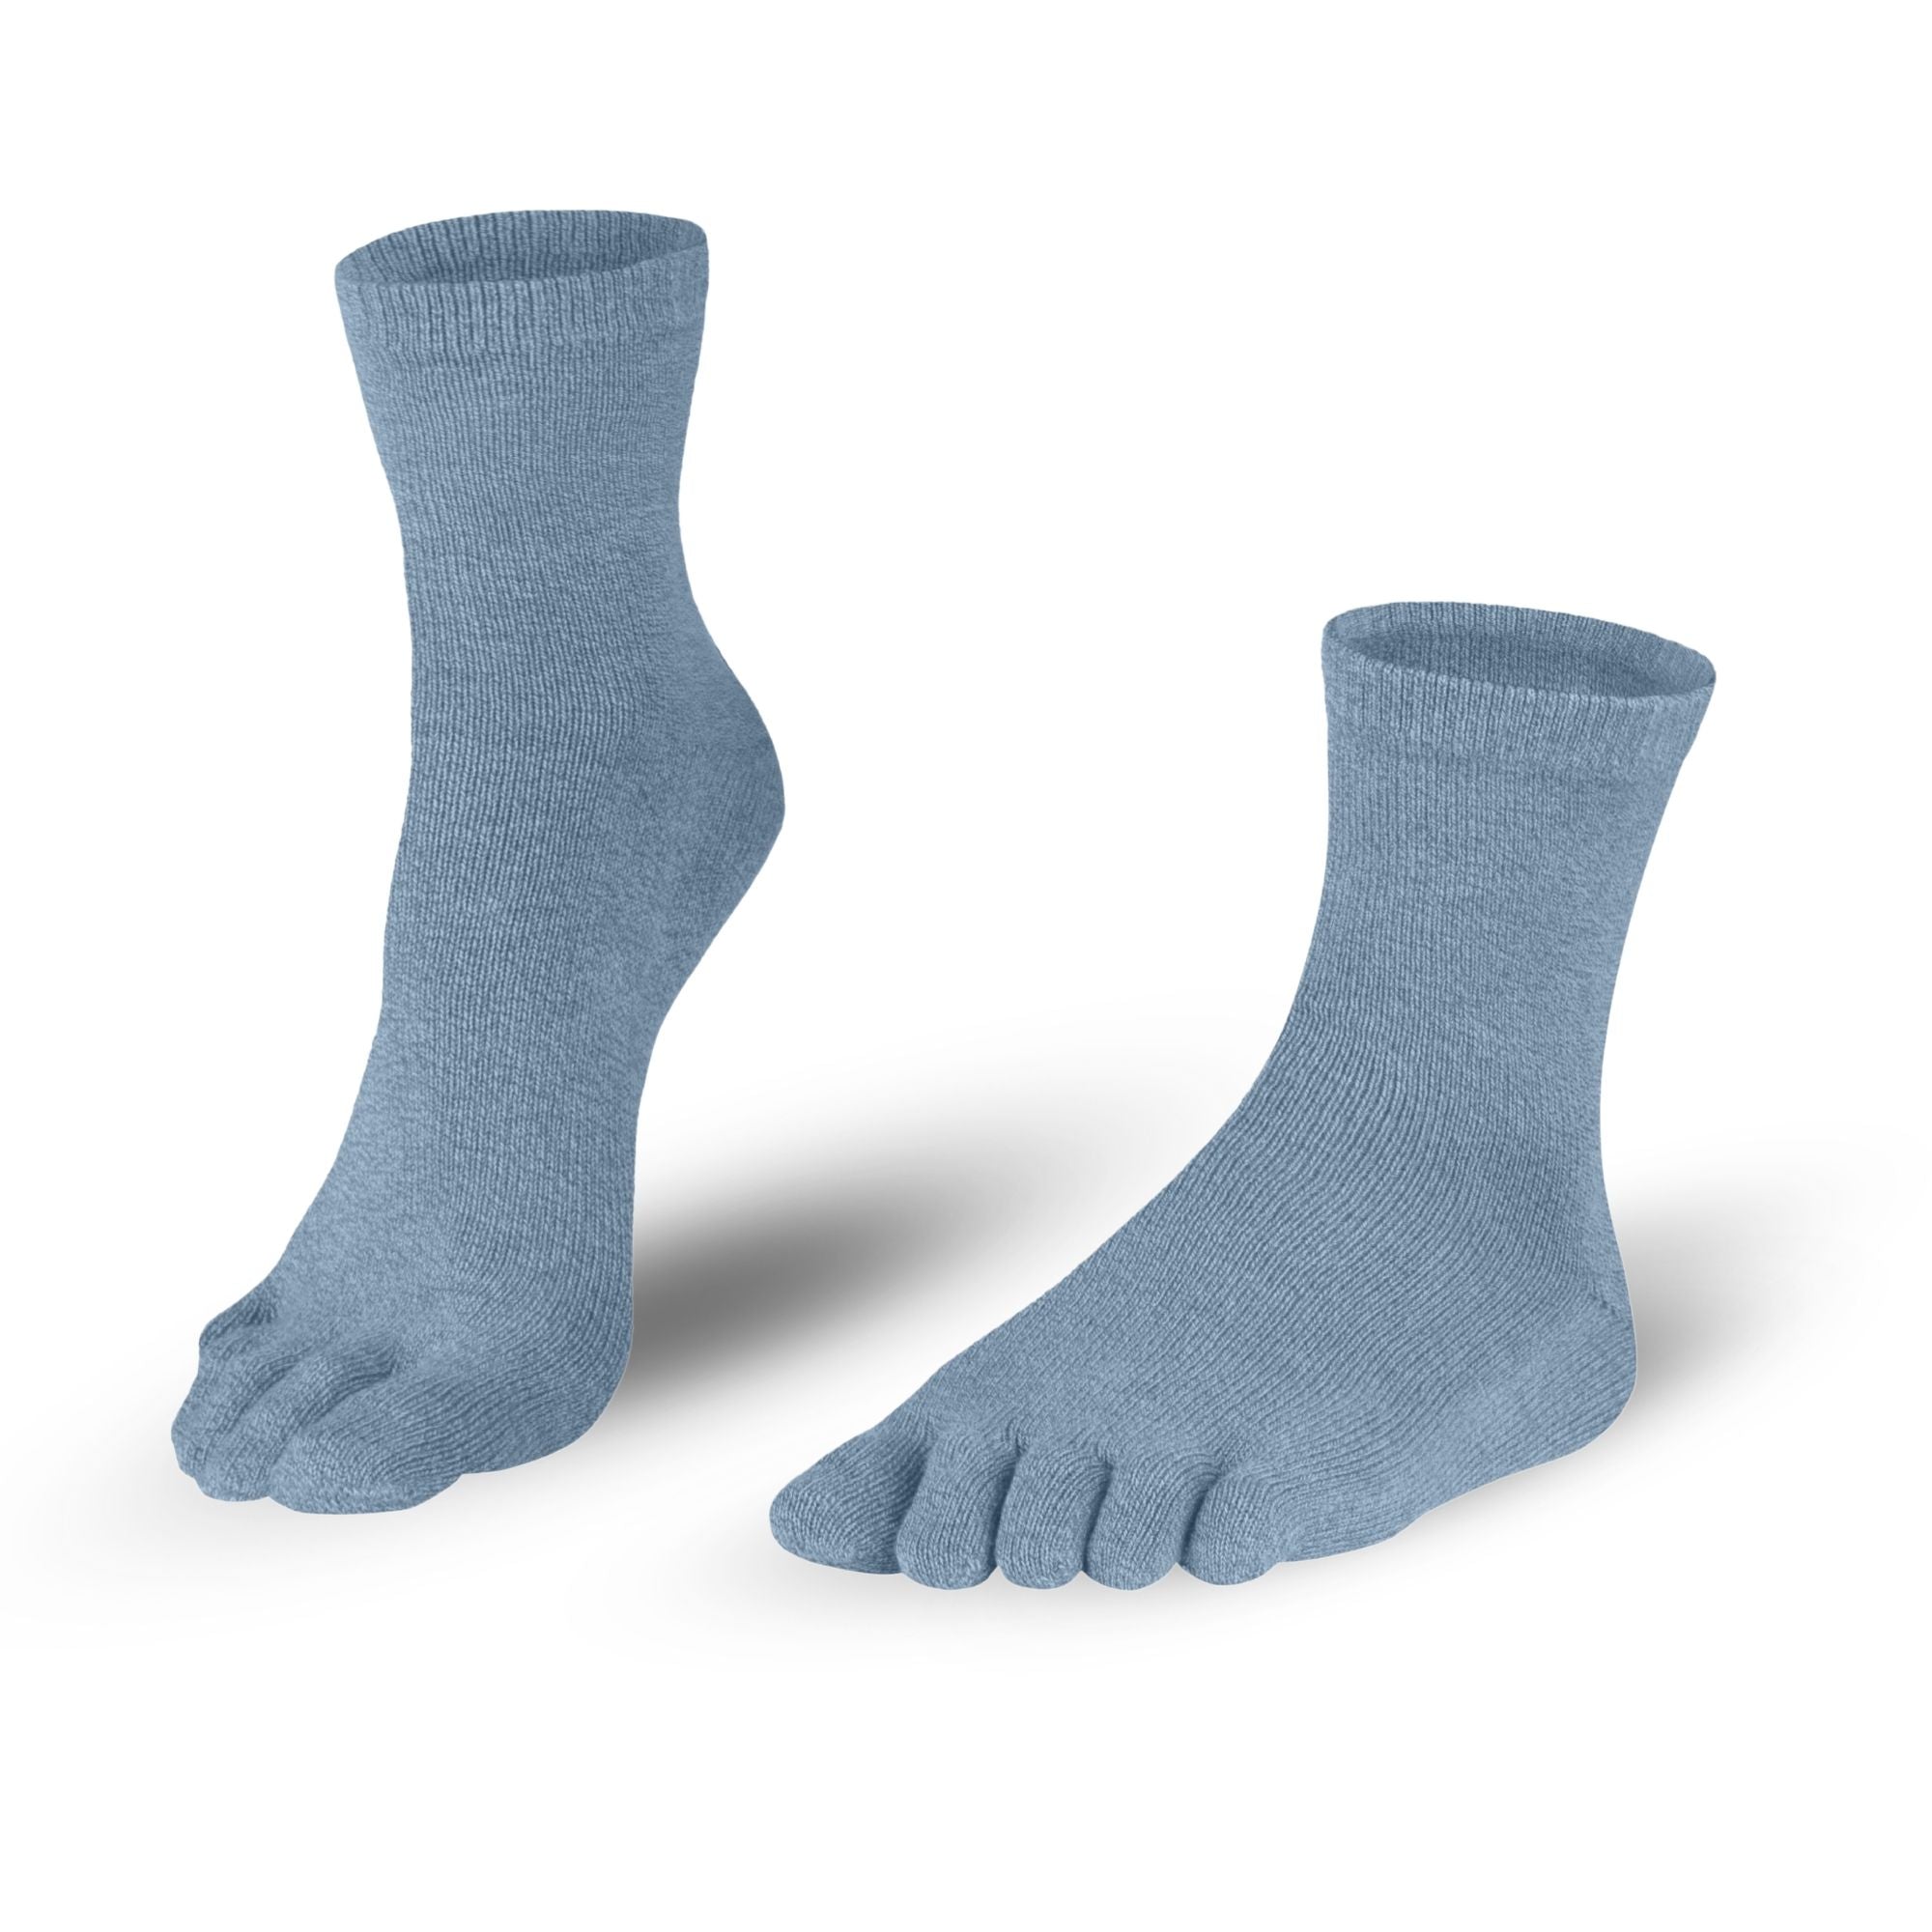 Cotton toe socks socks in blue-grey for ladies and gentlemen